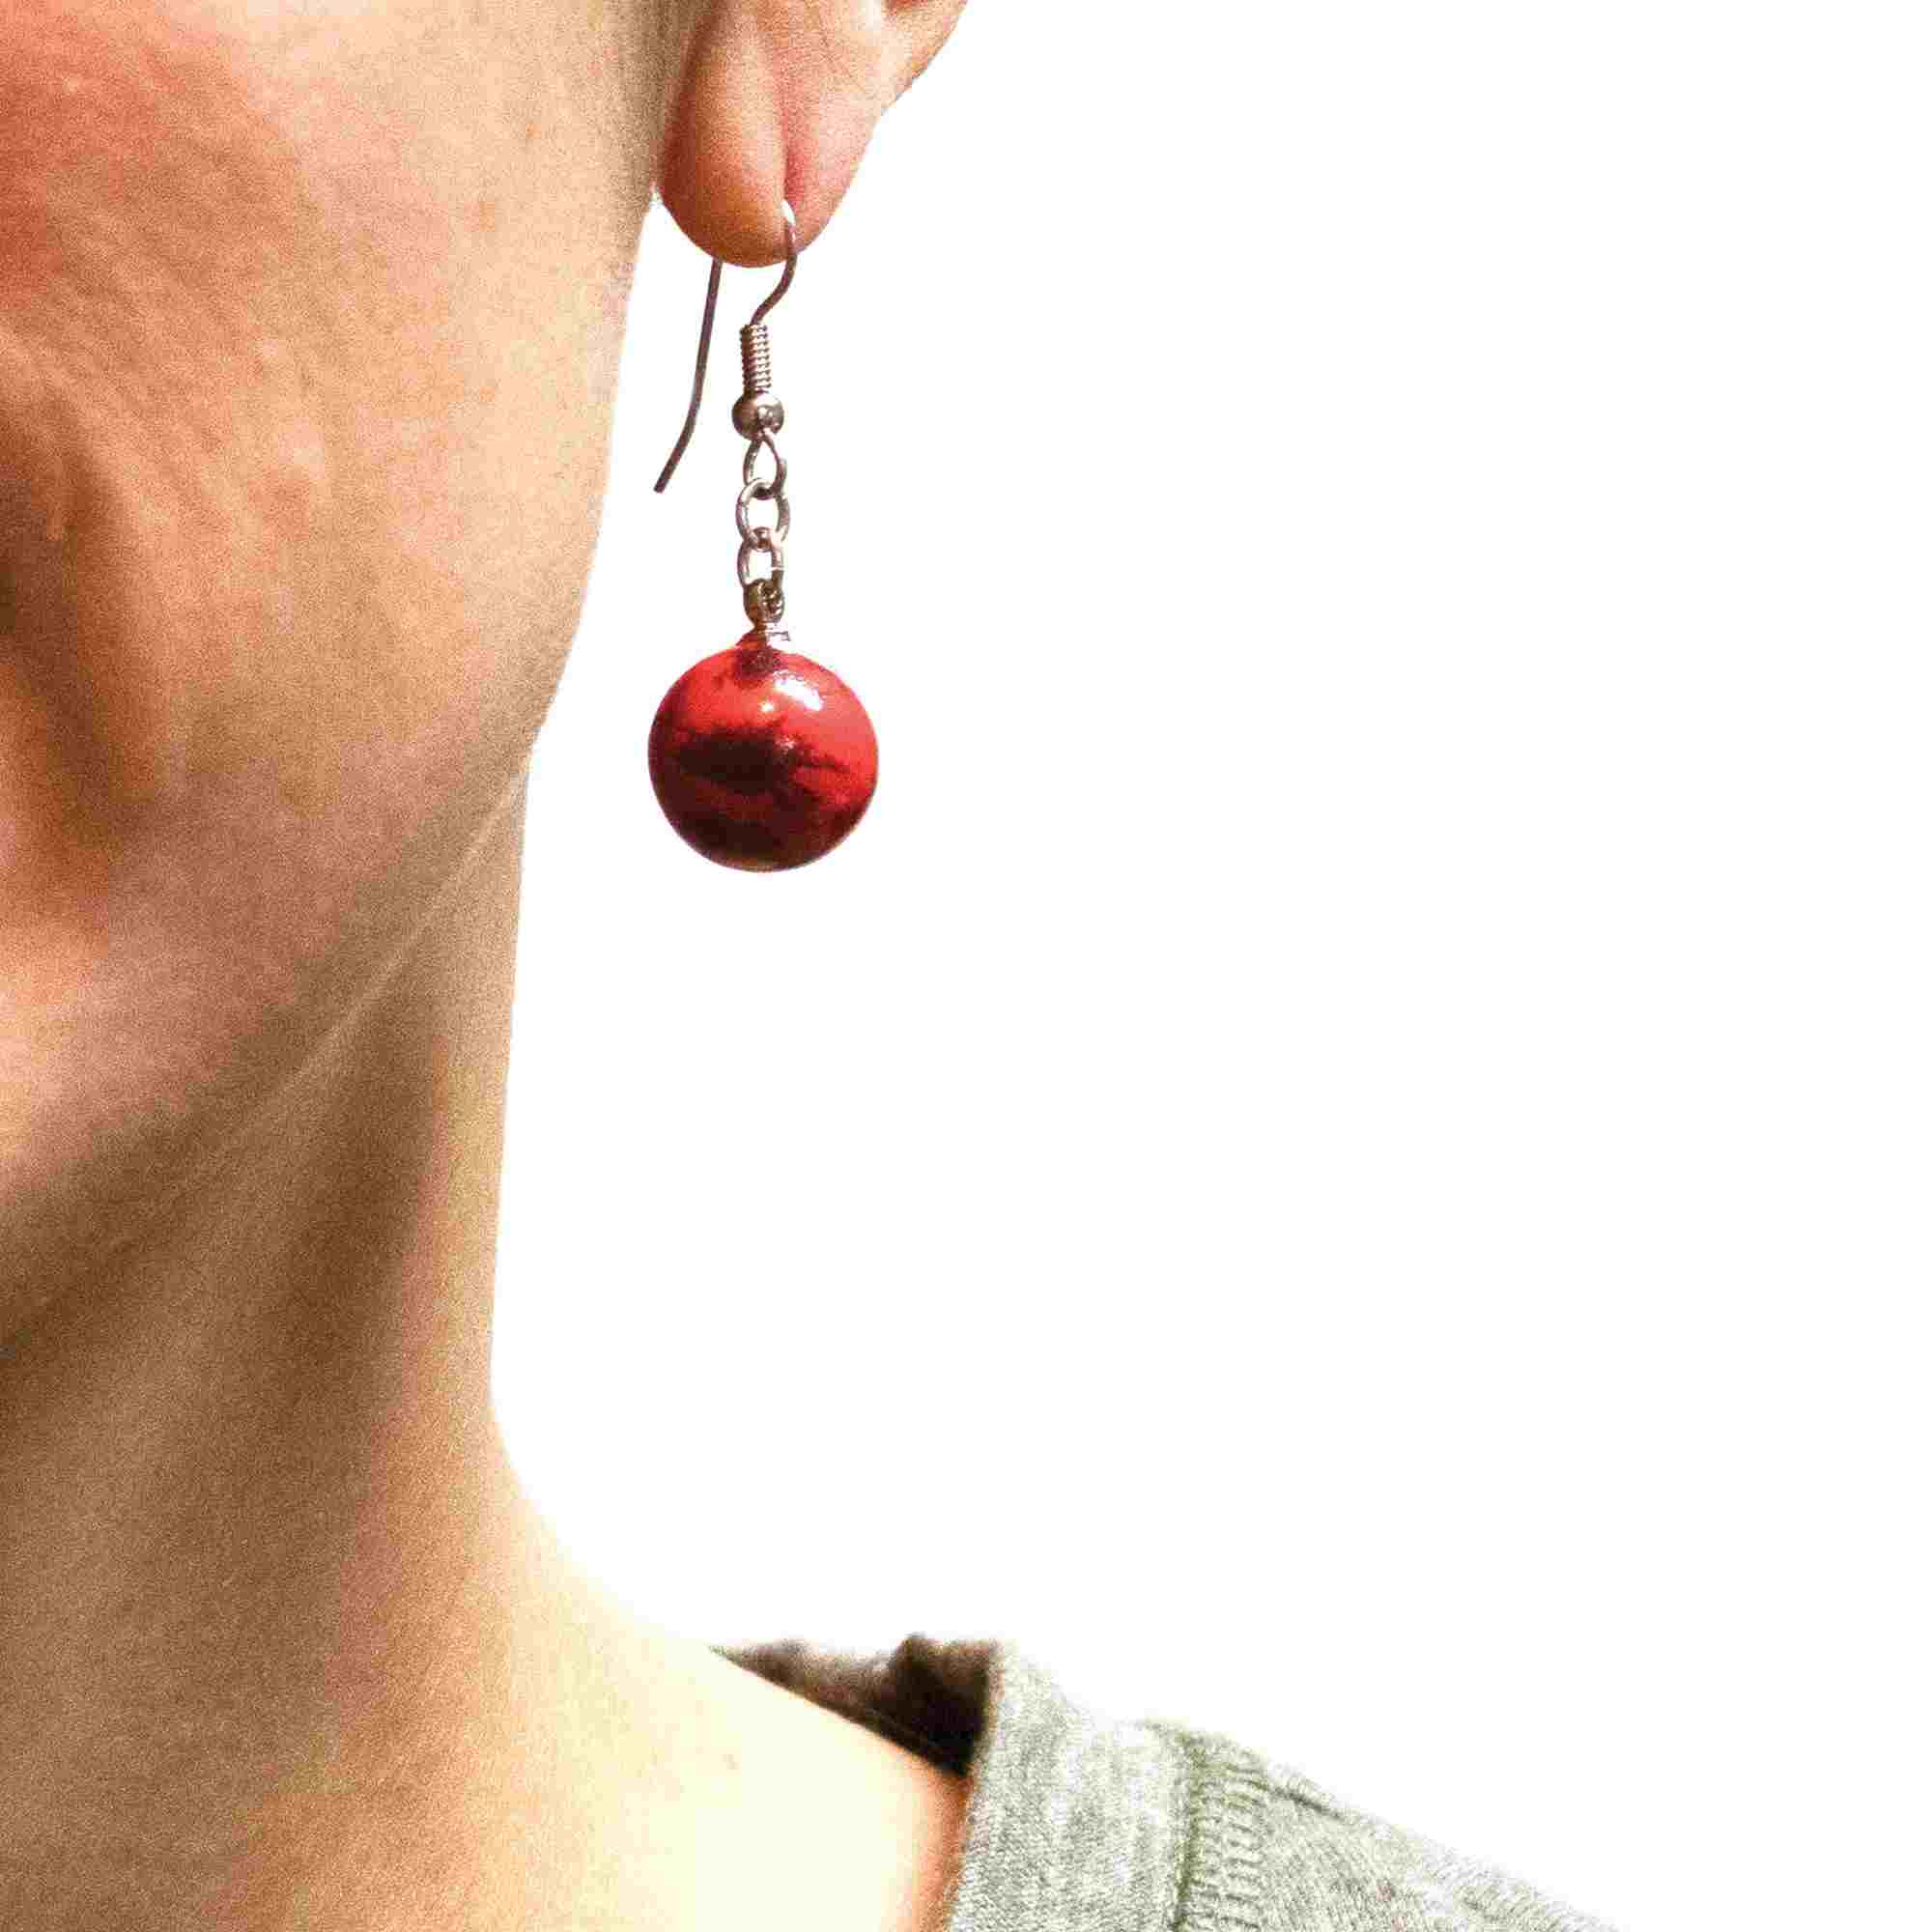 Mars earrings woman facing front